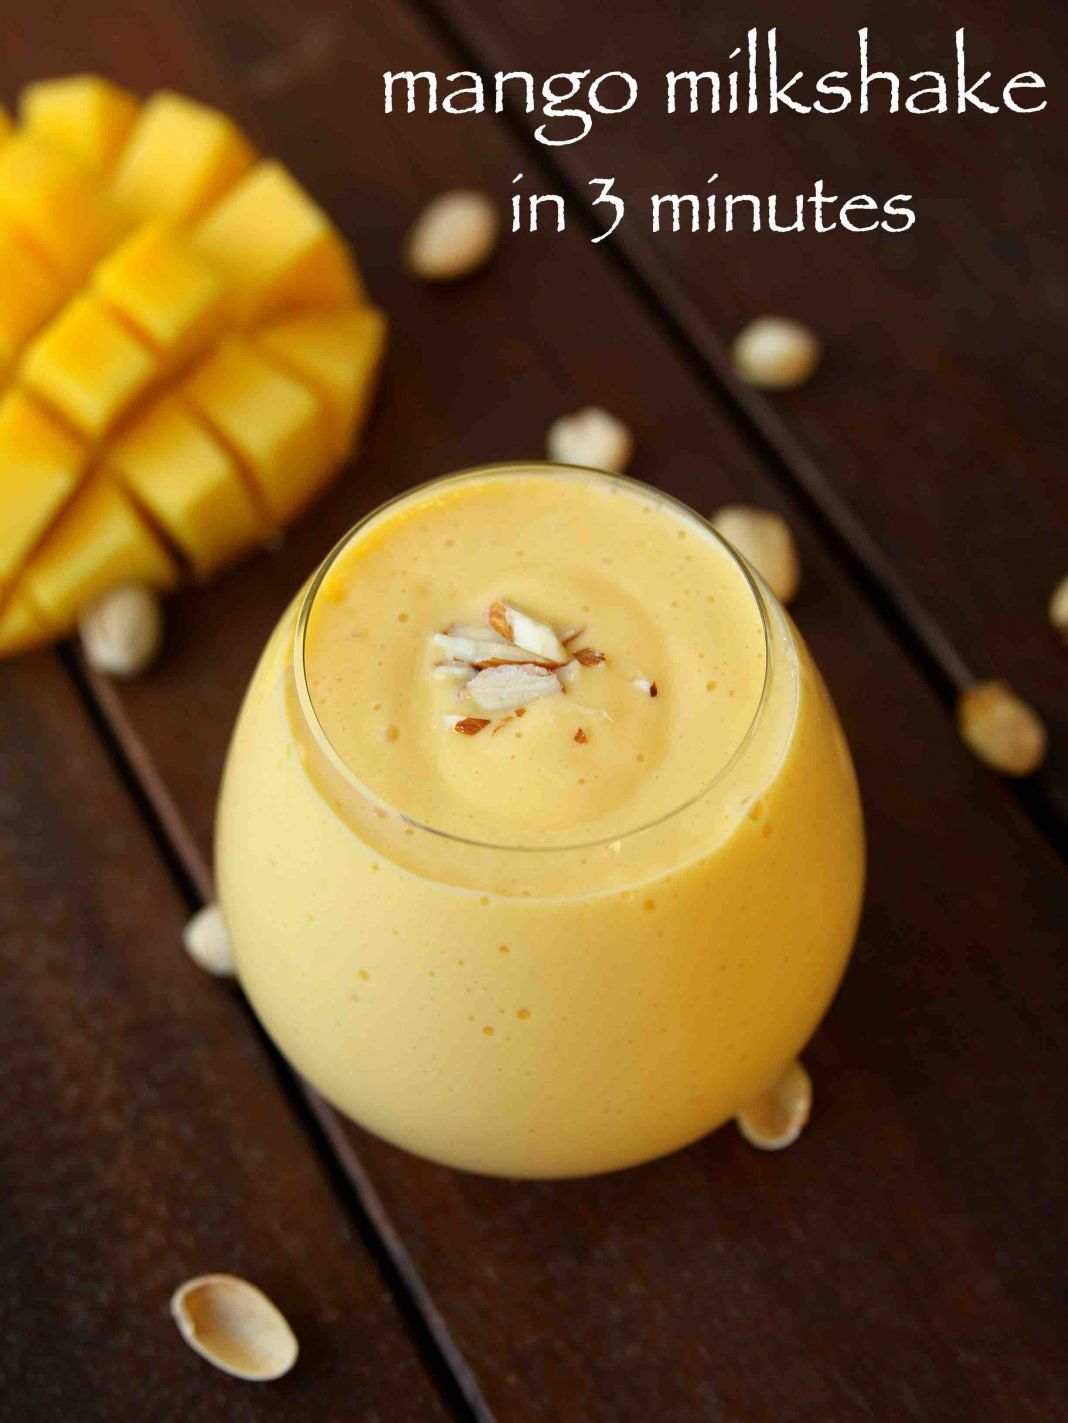 mango milkshake recipe | fresh mango shake | how to make mango shake